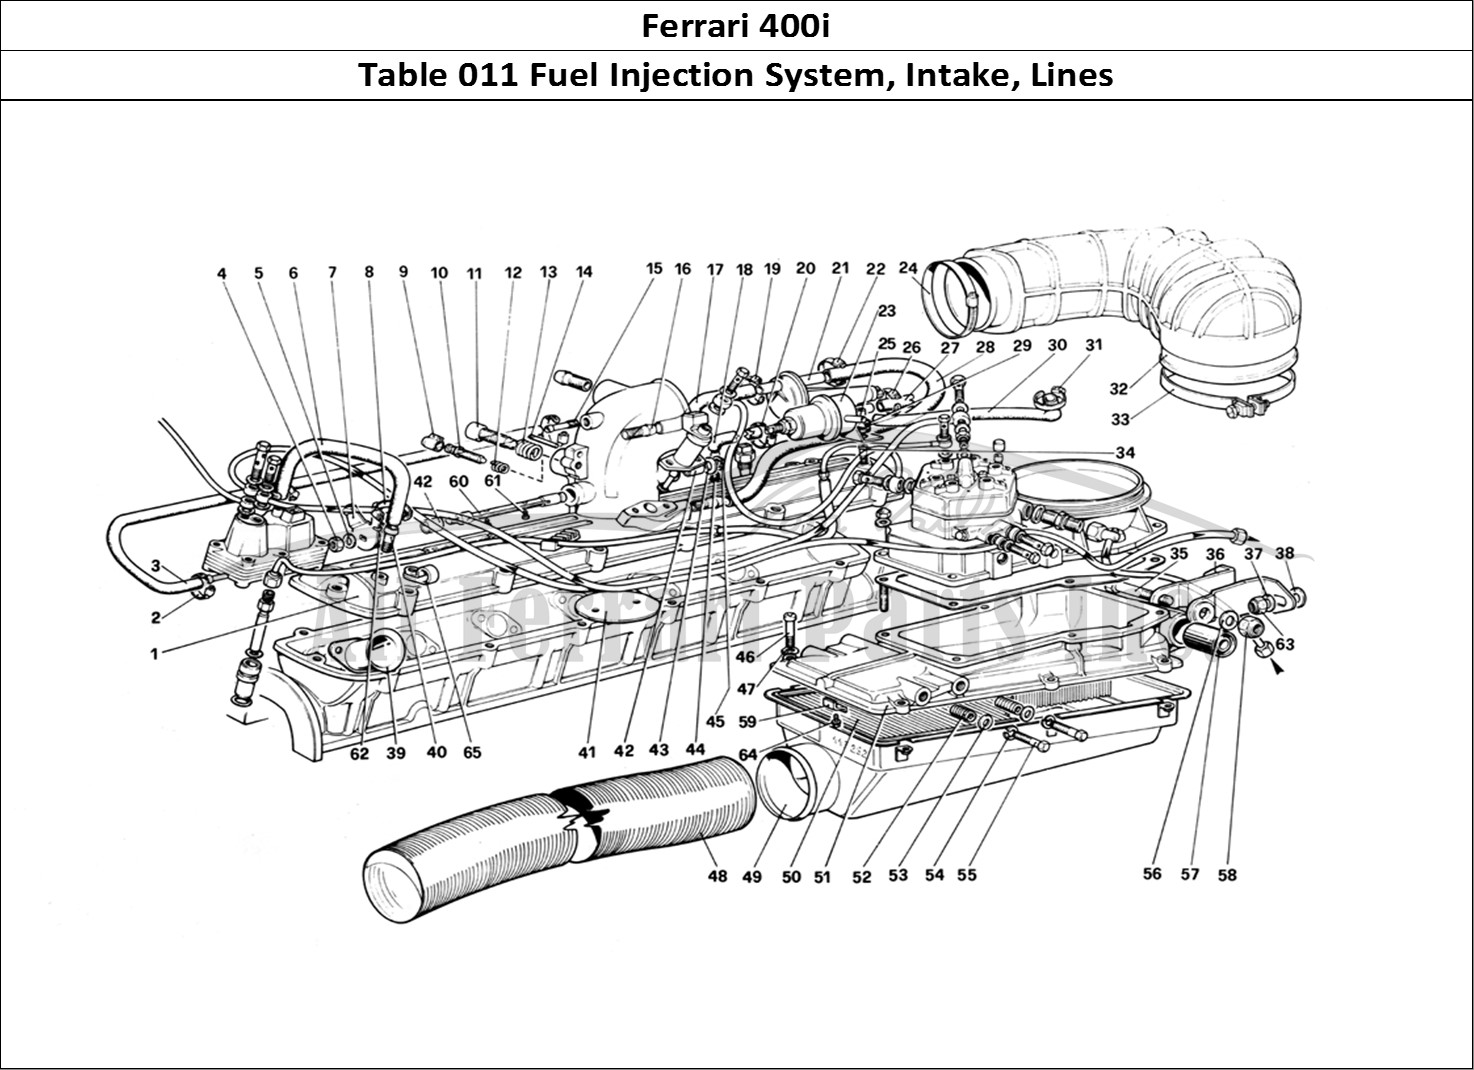 Ferrari Parts Ferrari 400i (1983 Mechanical) Page 011 Fuel Injuction System - A